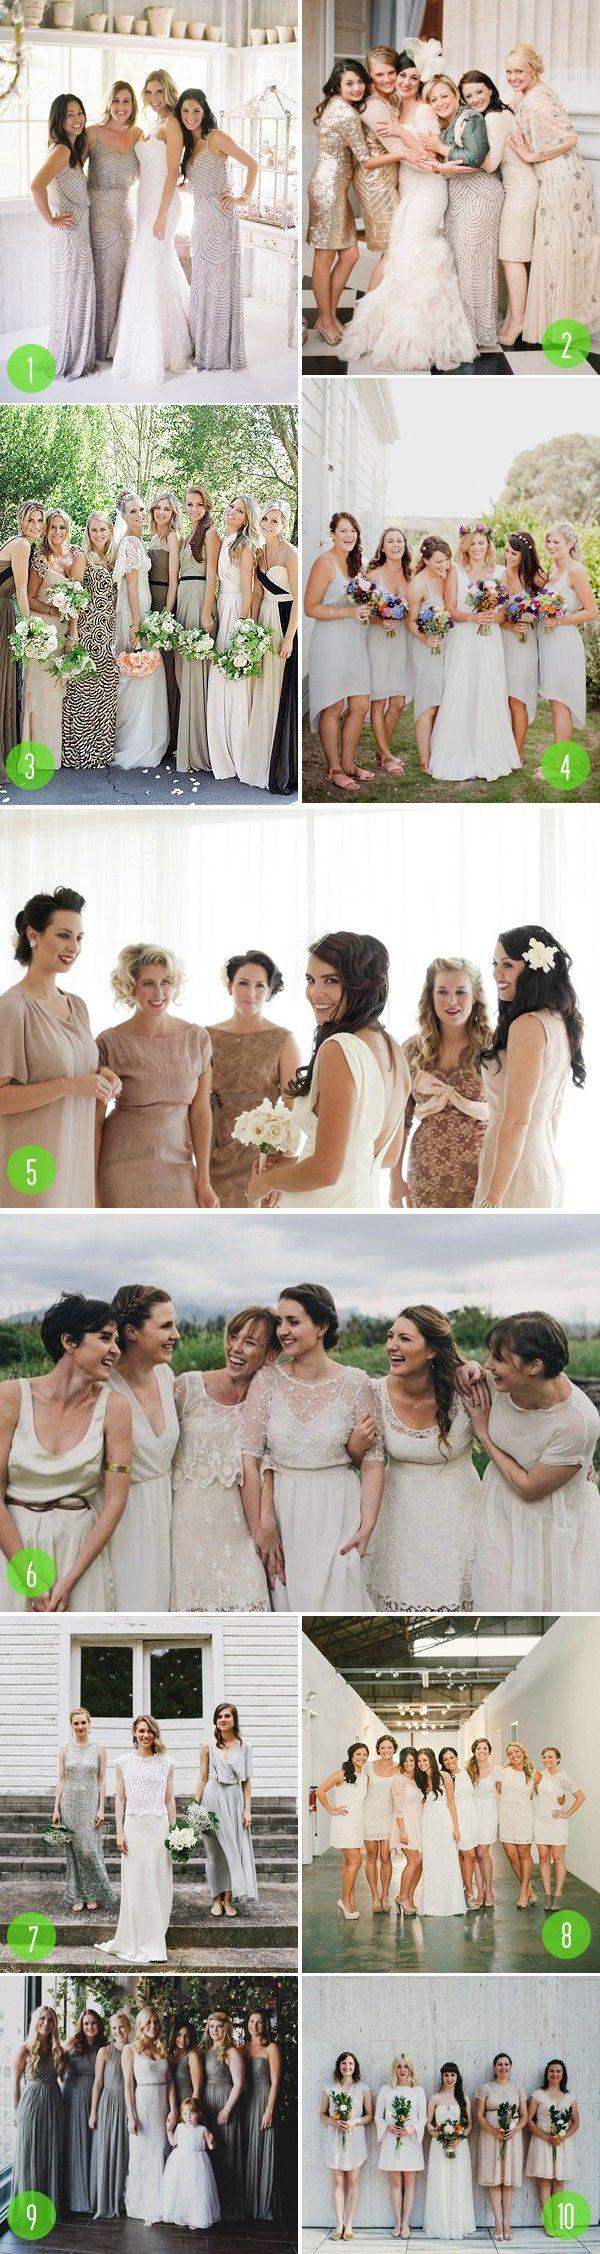 Wedding - Top 10: Neutral Bridesmaids Dresses